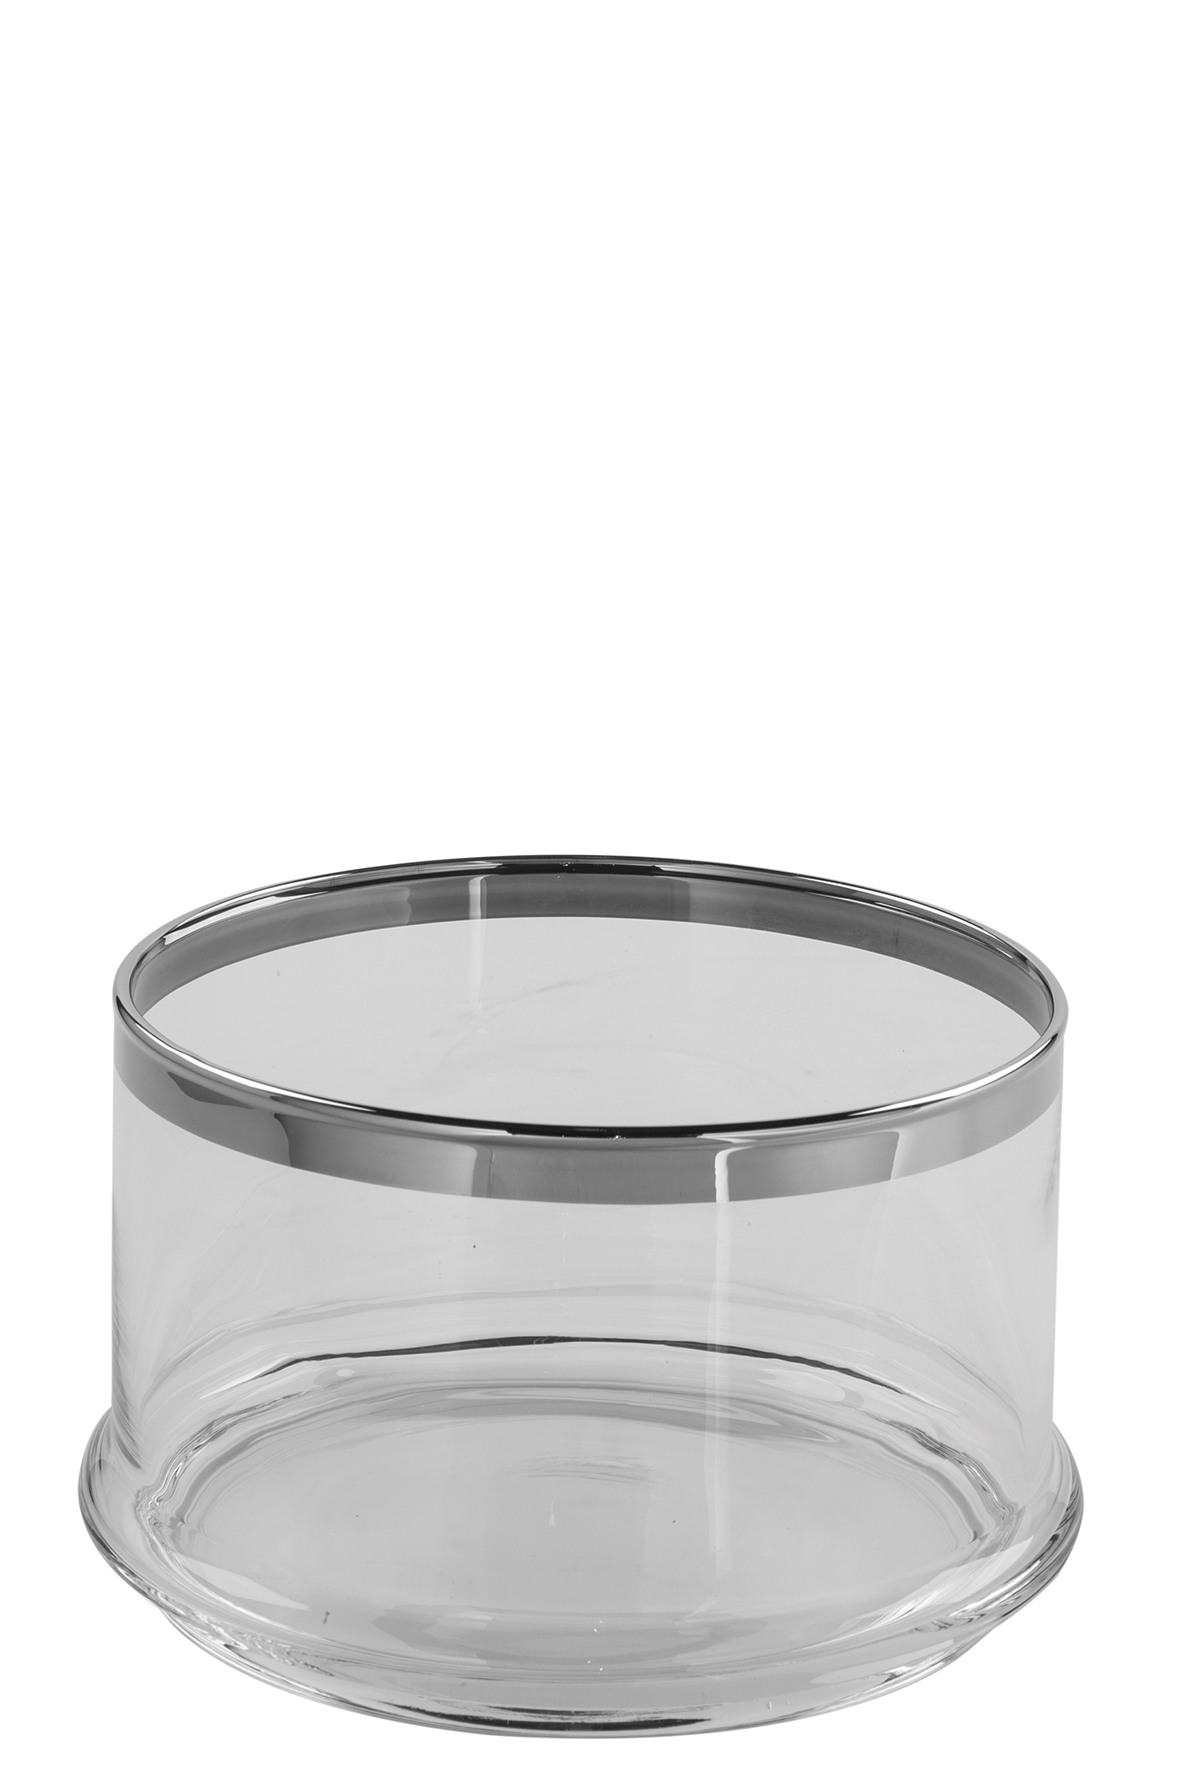 111025 Fink Platinum Schale Glas mit Platinumrand klar